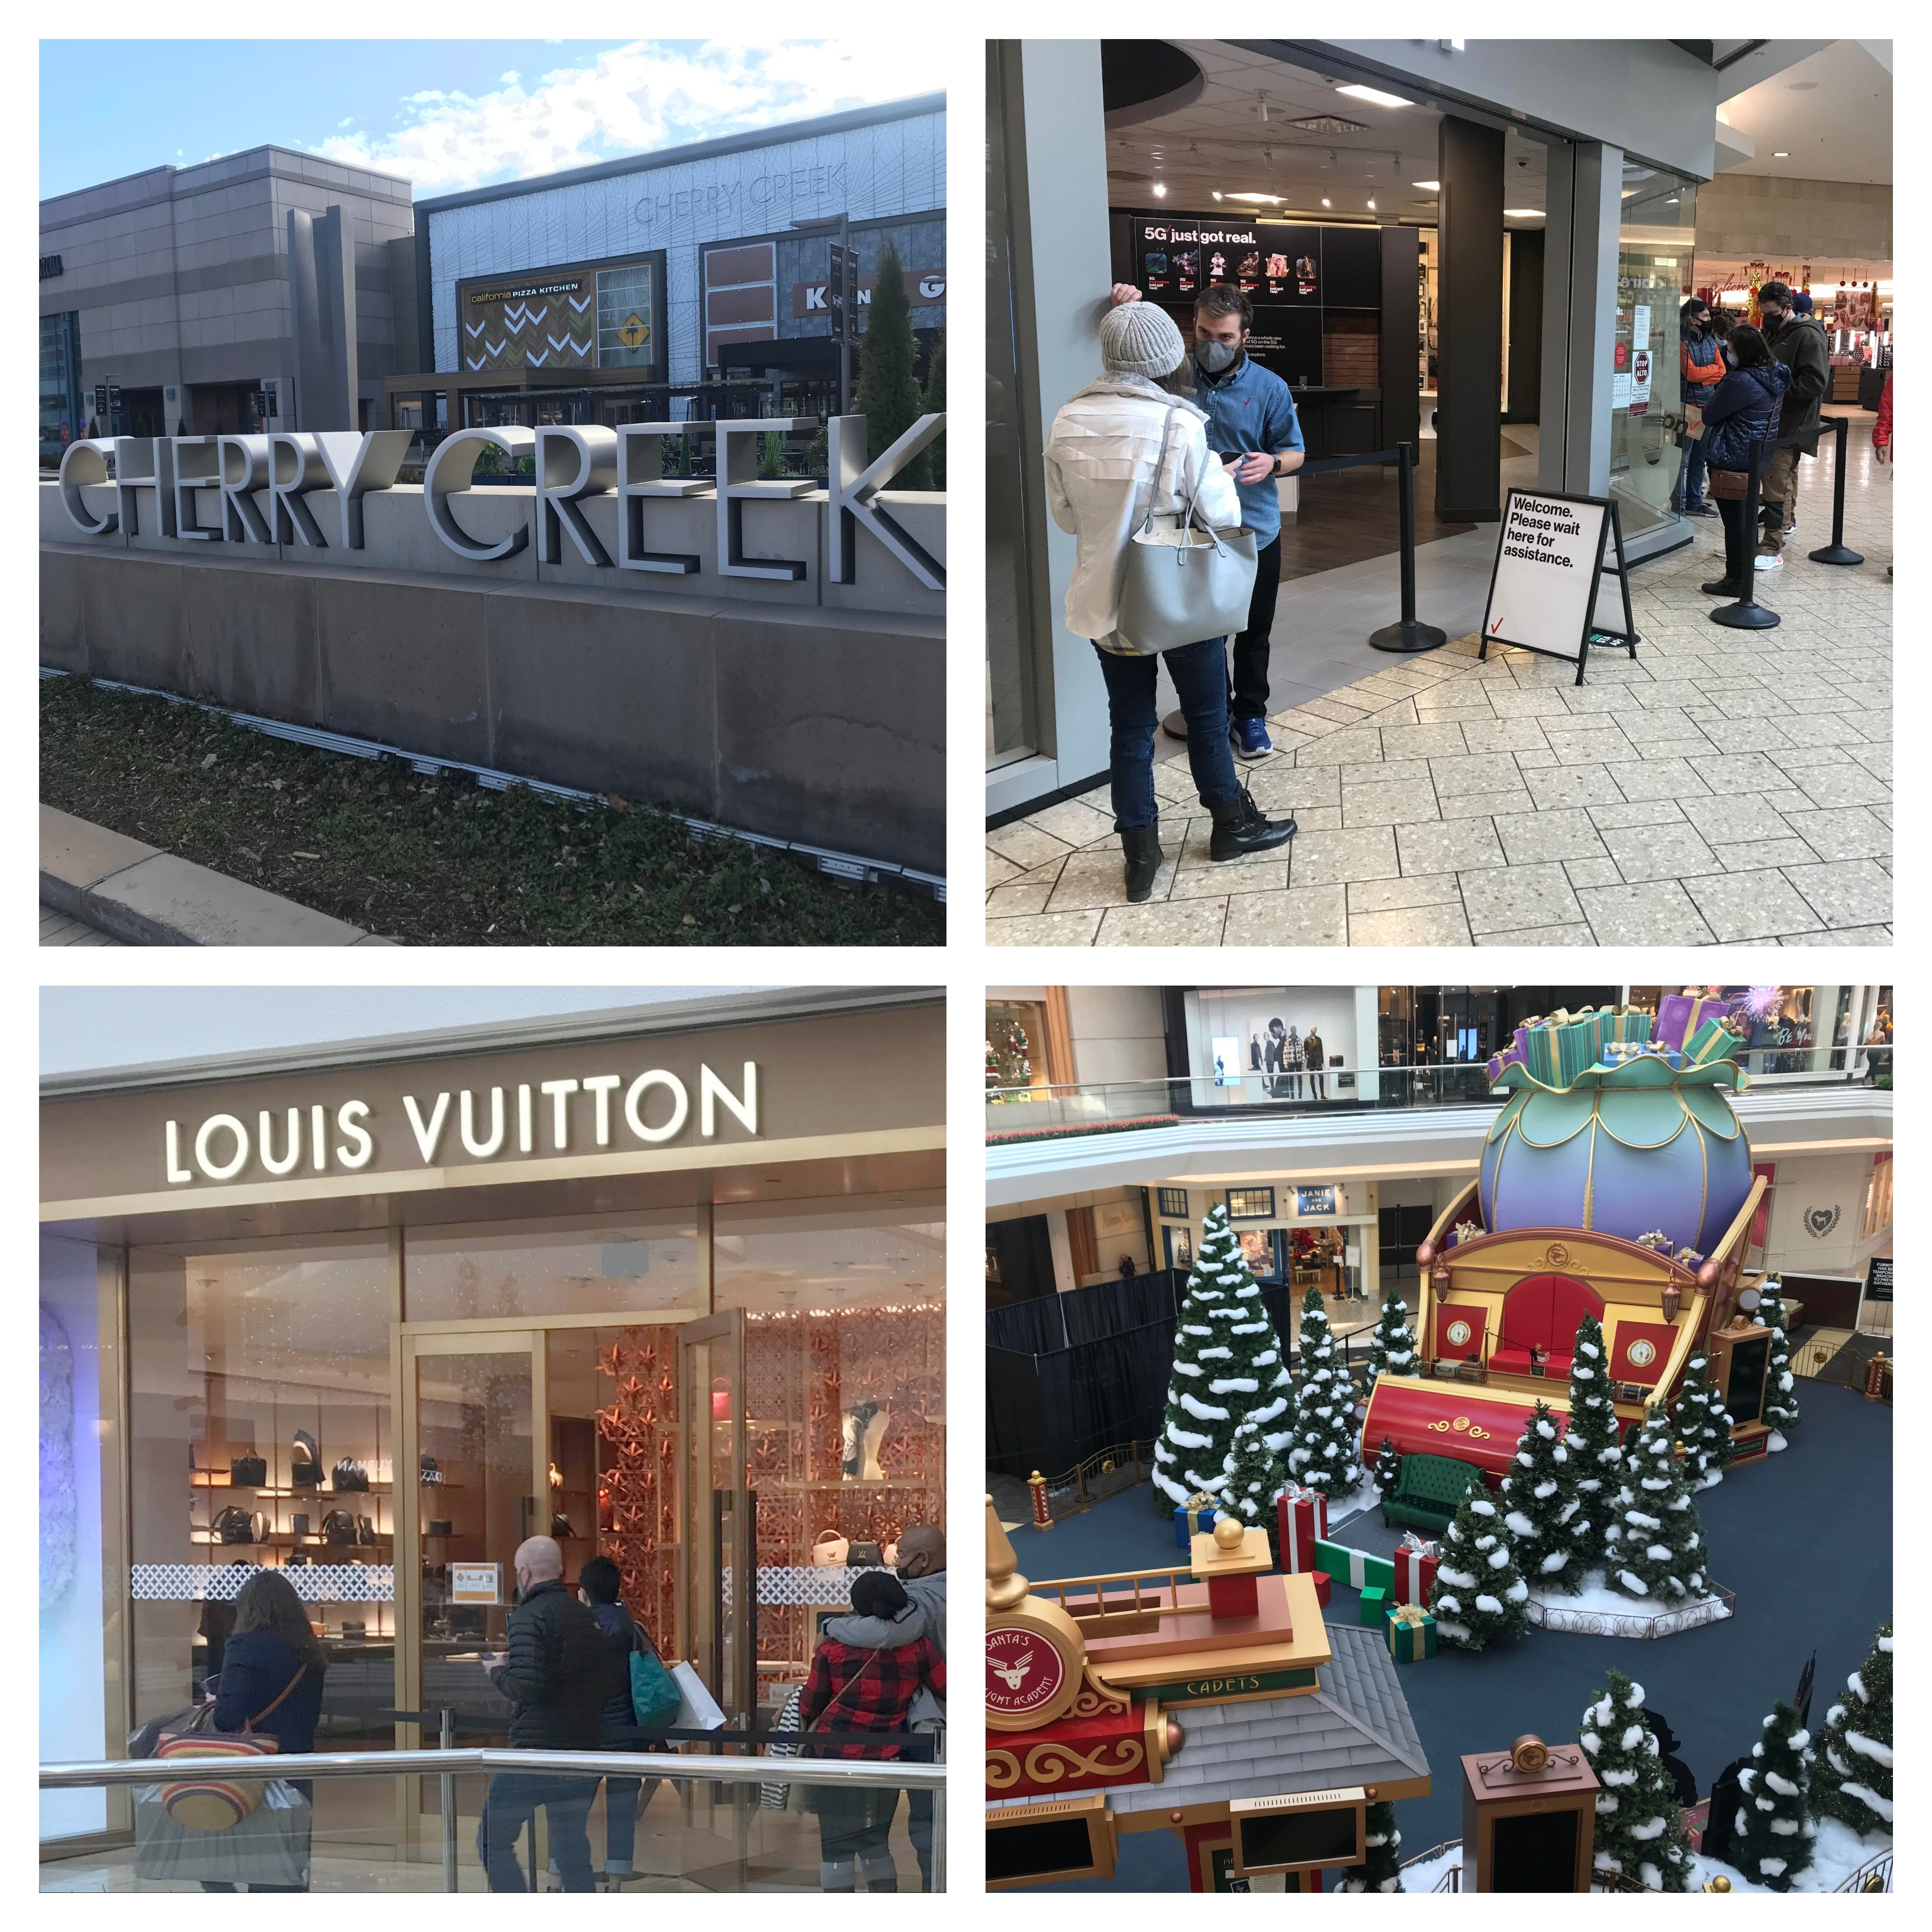 Louis Vuitton In Cherry Creek Mall